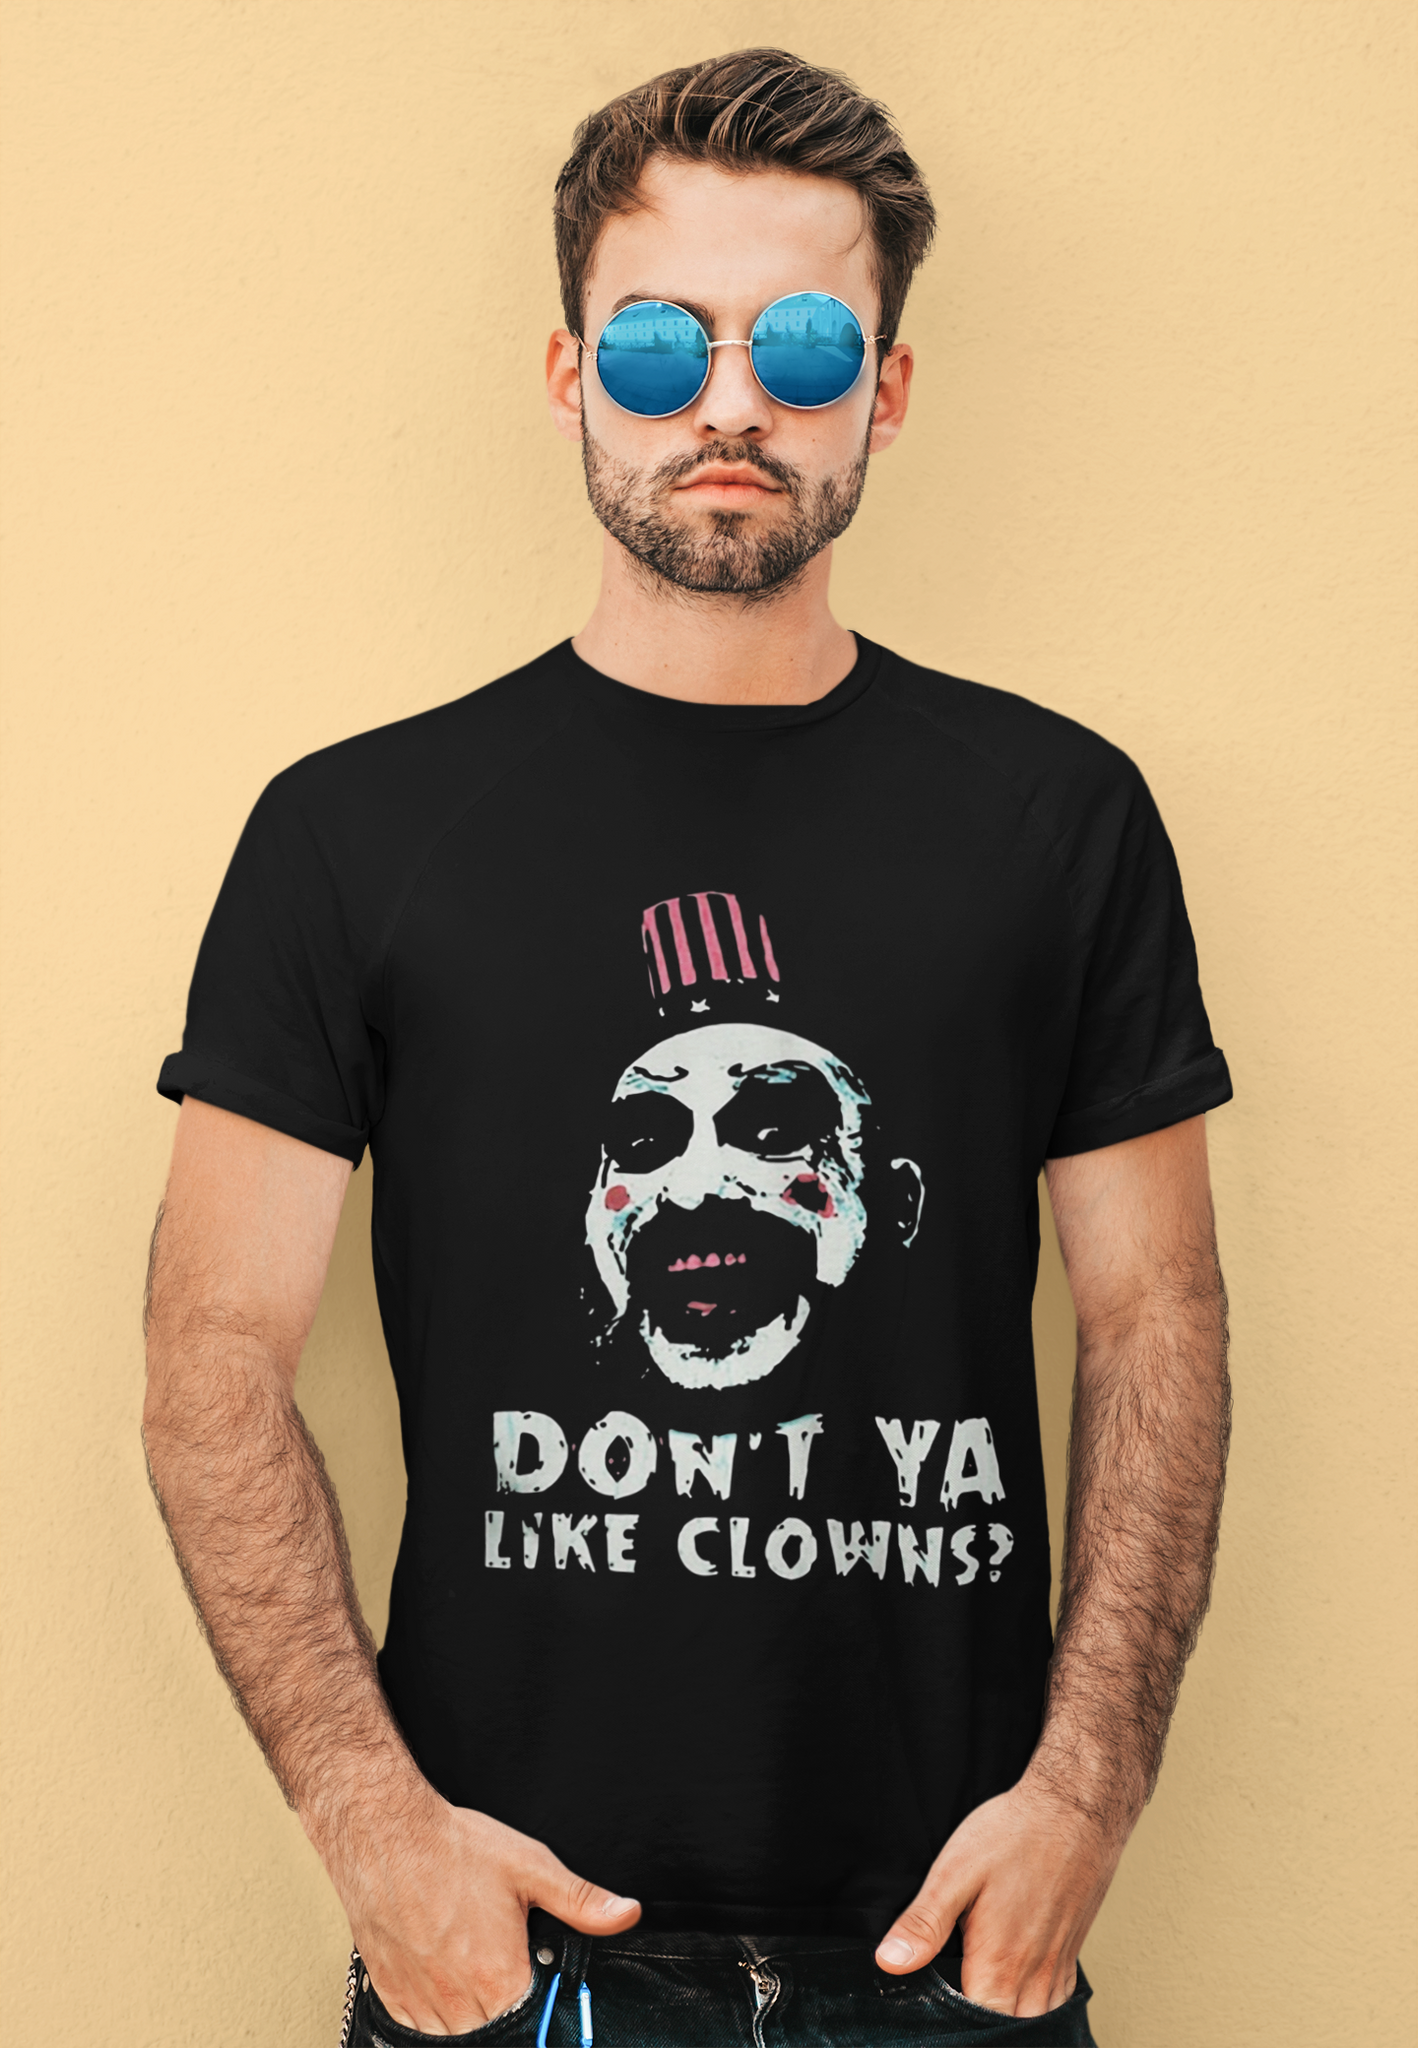 House Of 1000 Corpses T Shirt, Captain Spaulding Tshirt, Dont Ya Like Clowns Shirt, Halloween Gifts